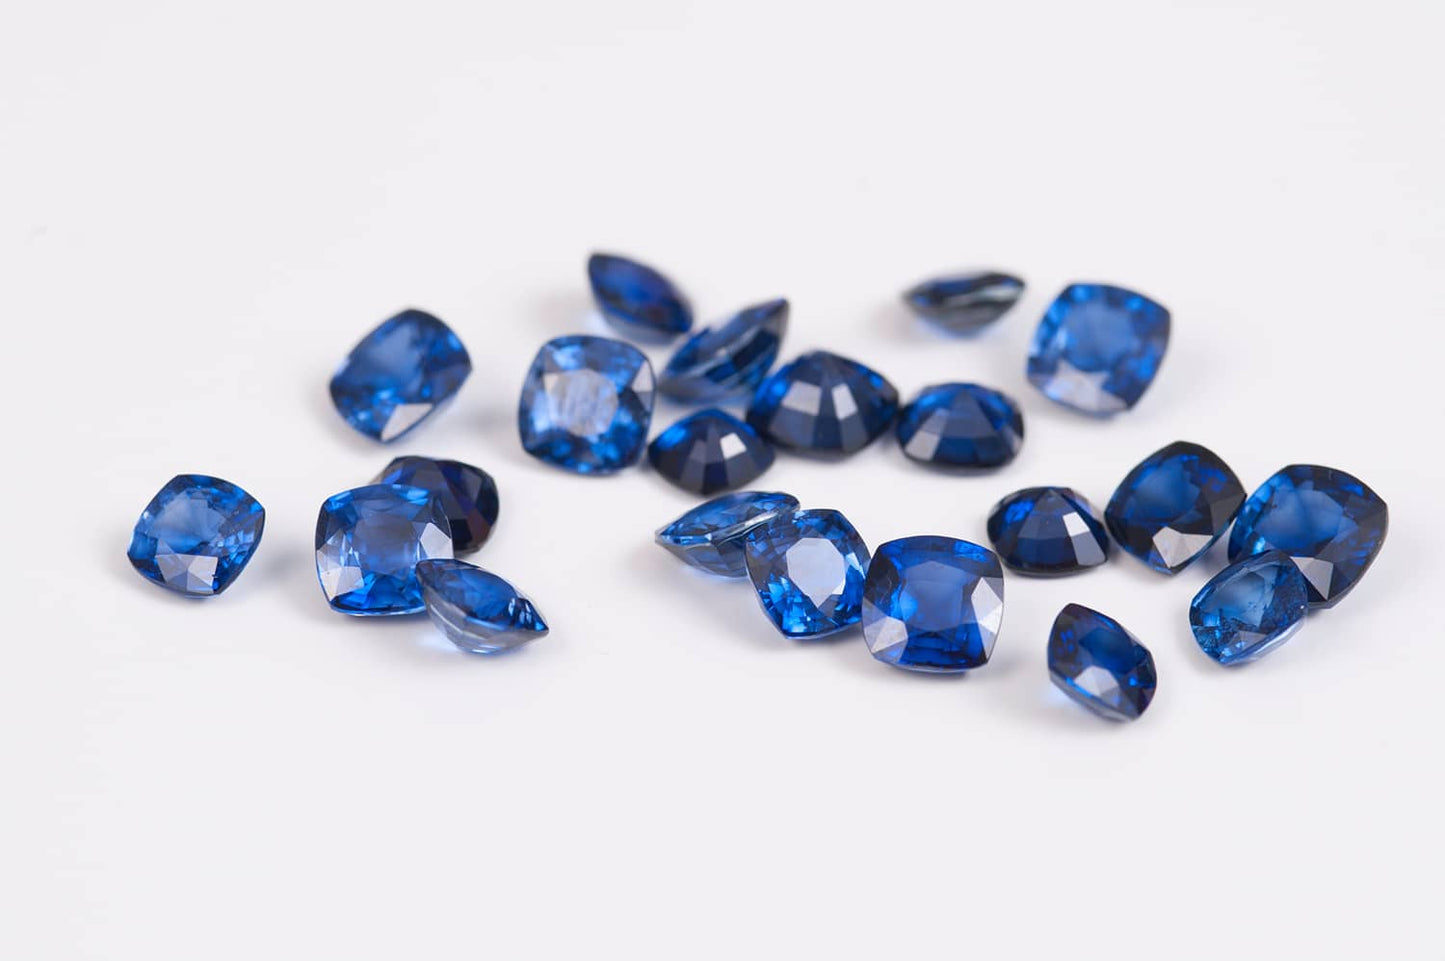 Assorted sapphire gemstones